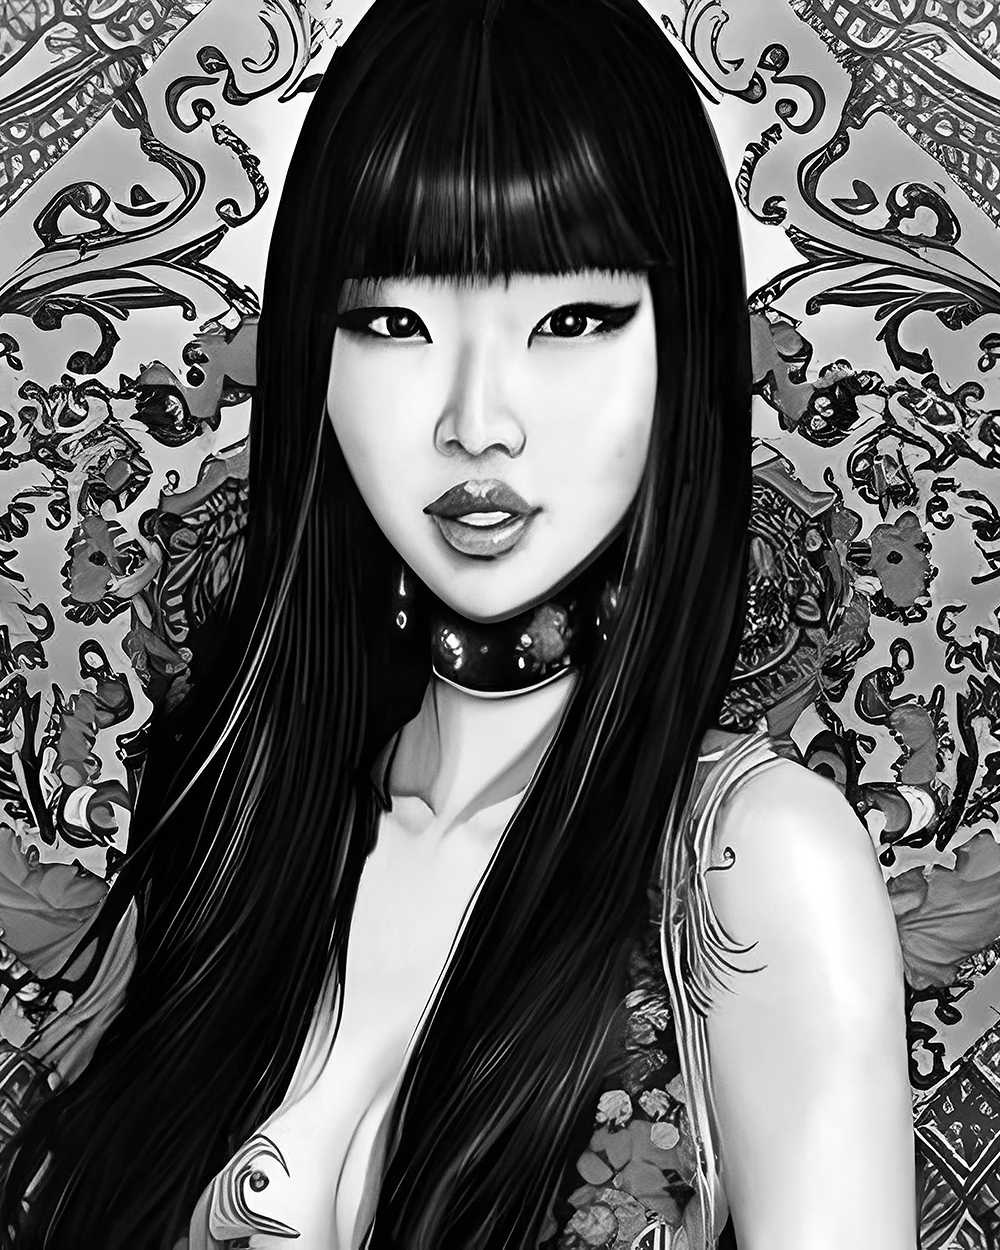 Asian Beauty 2 Digital Art bw